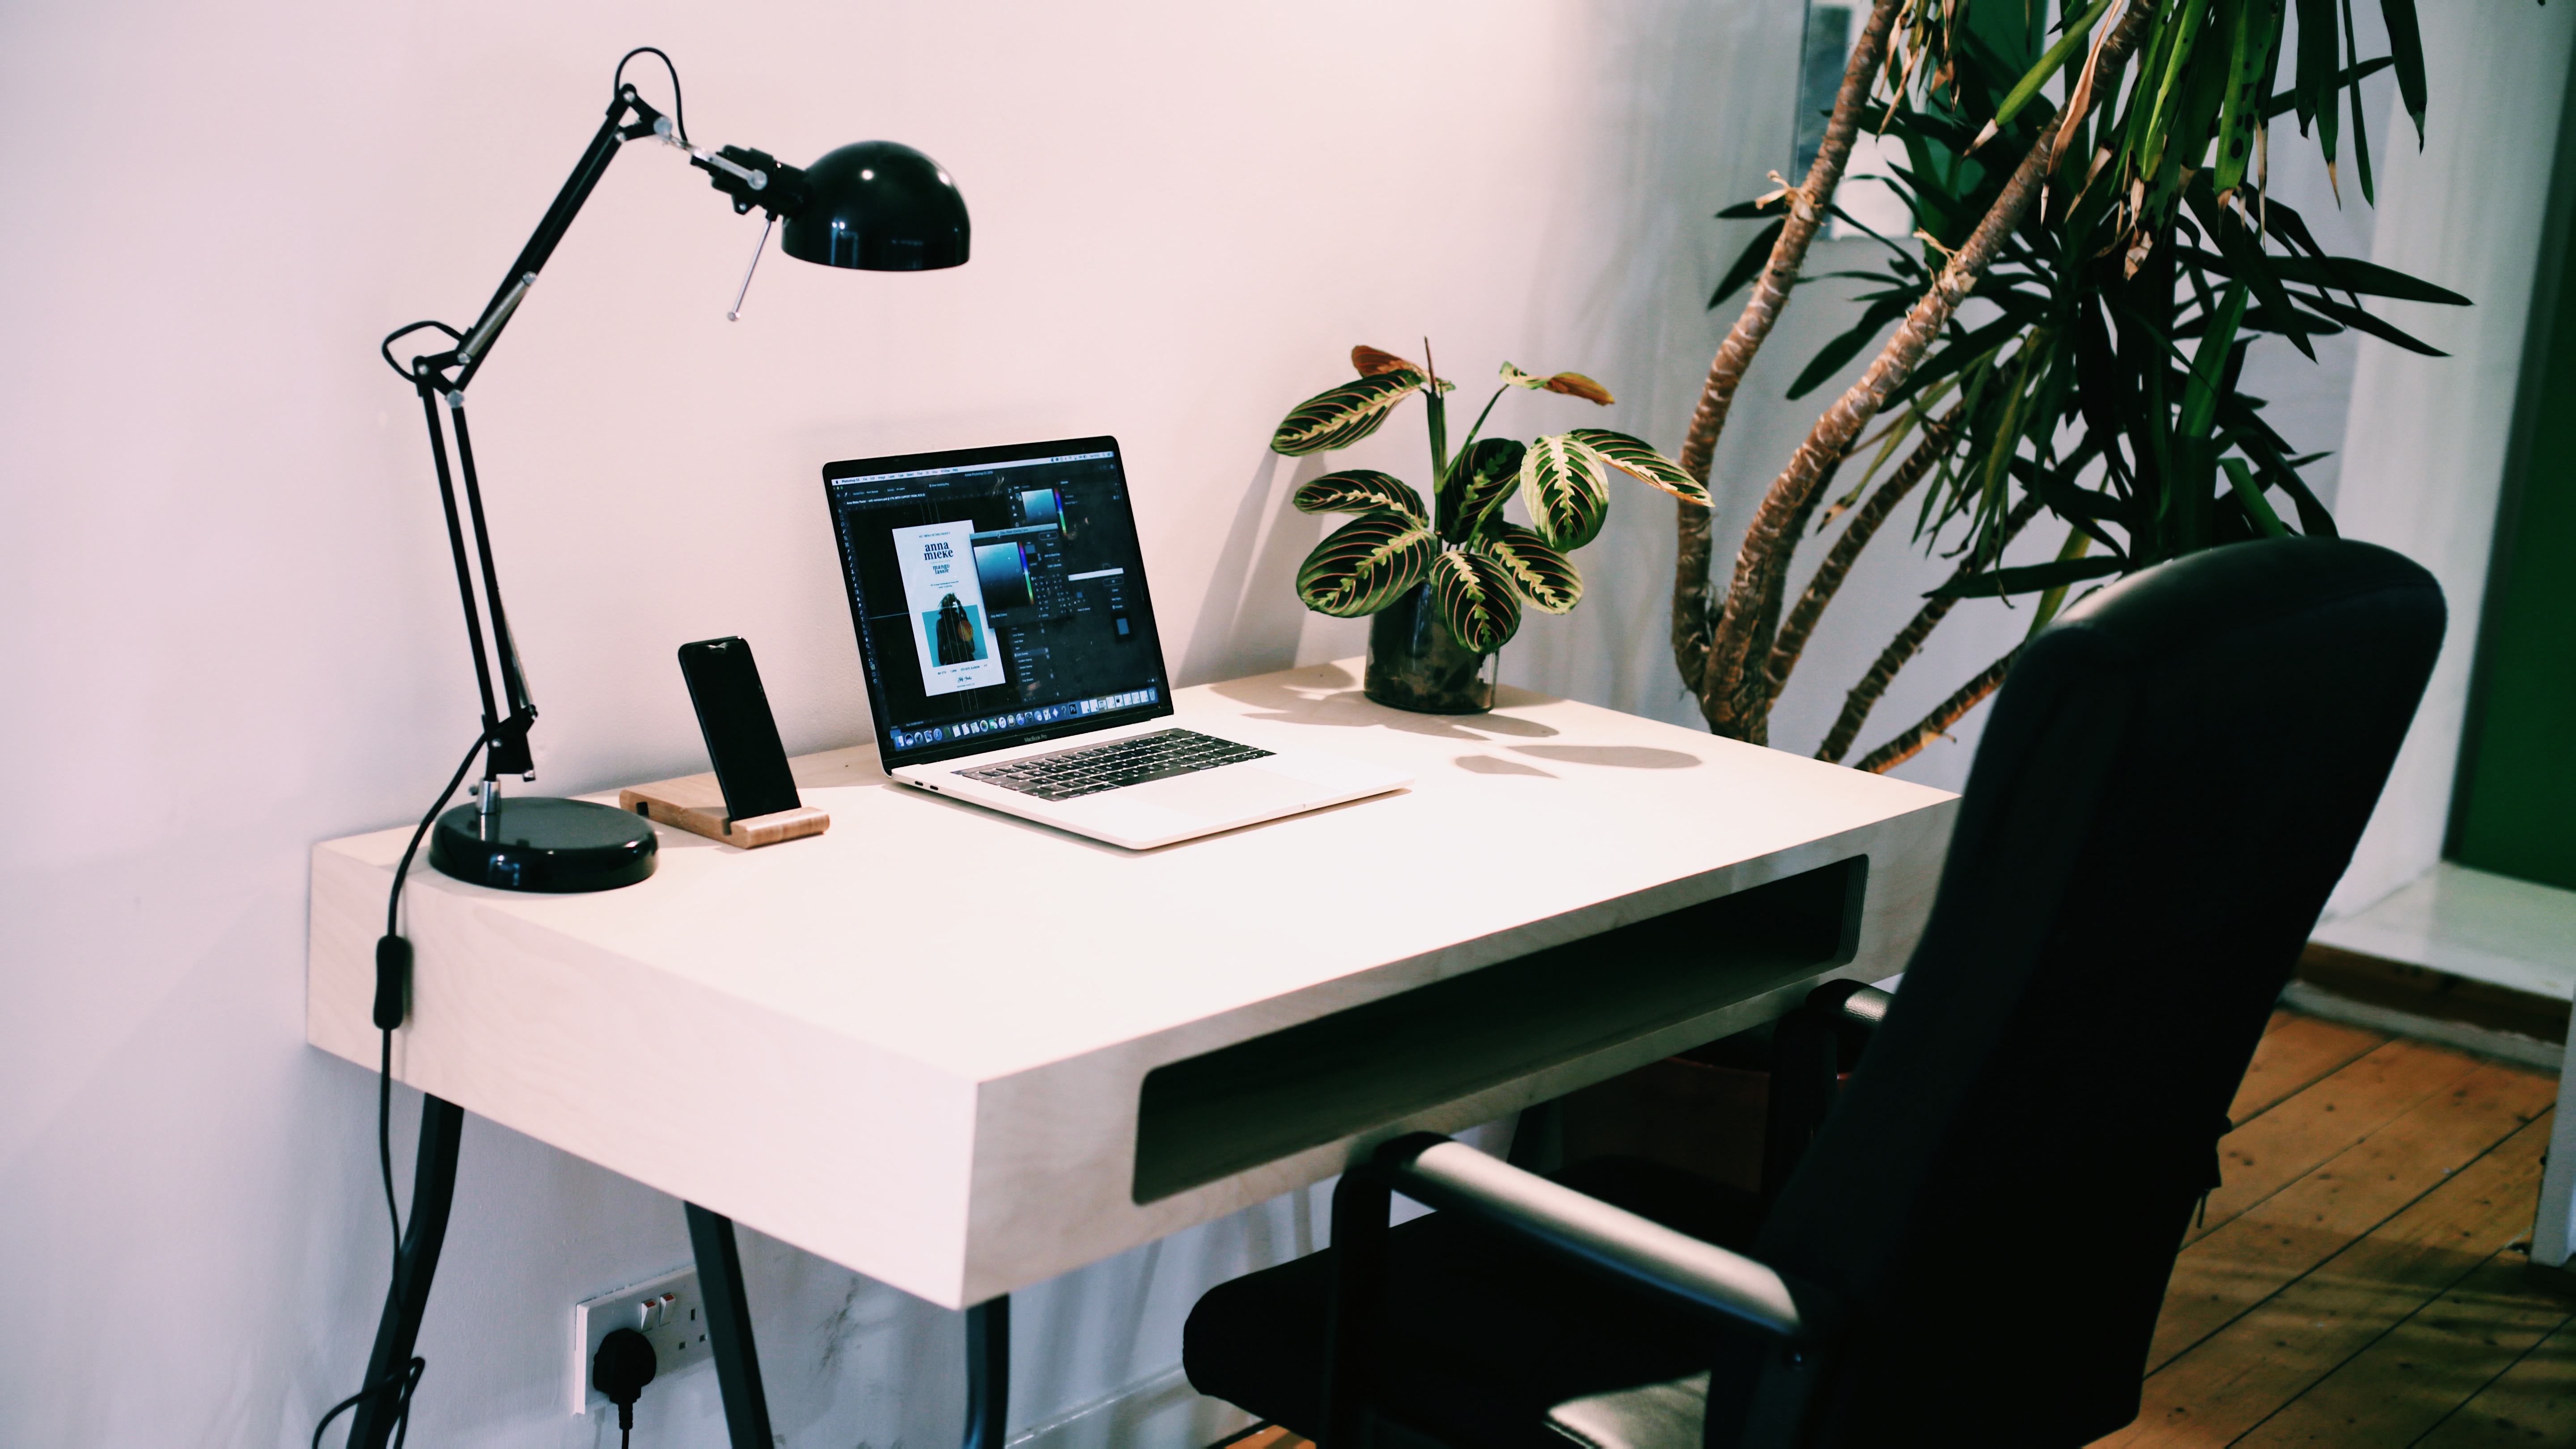 Studio Workshop Spaces Creative Desk Office Spaces Available